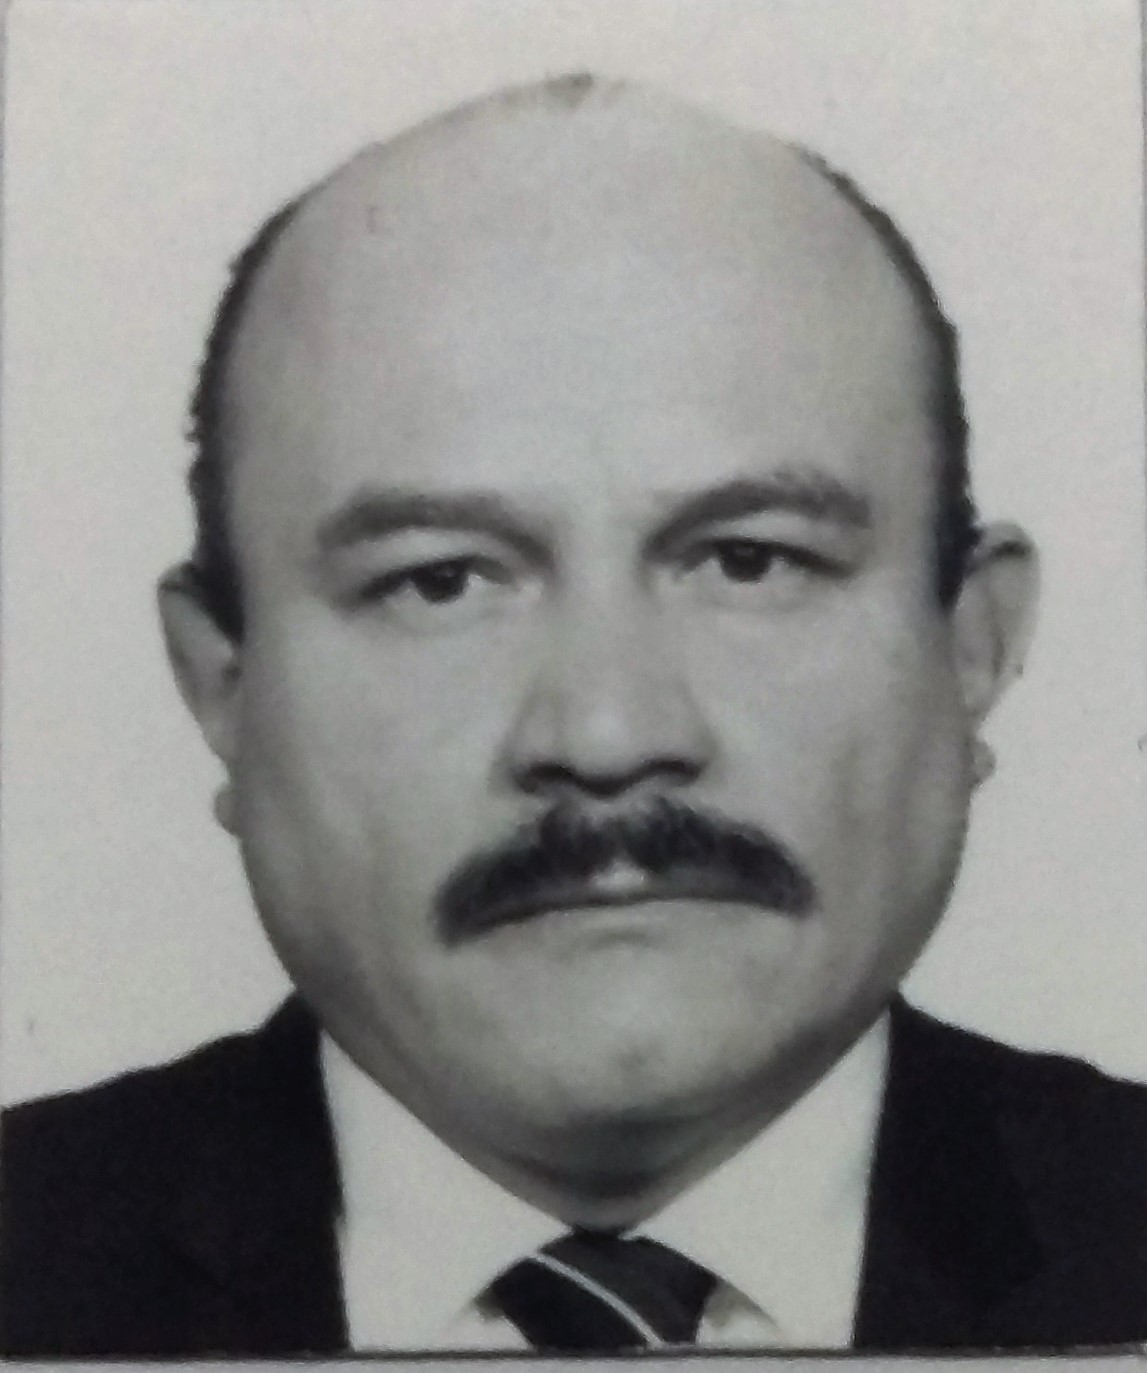 DR. EDUARDO PEYROT VALLEJO